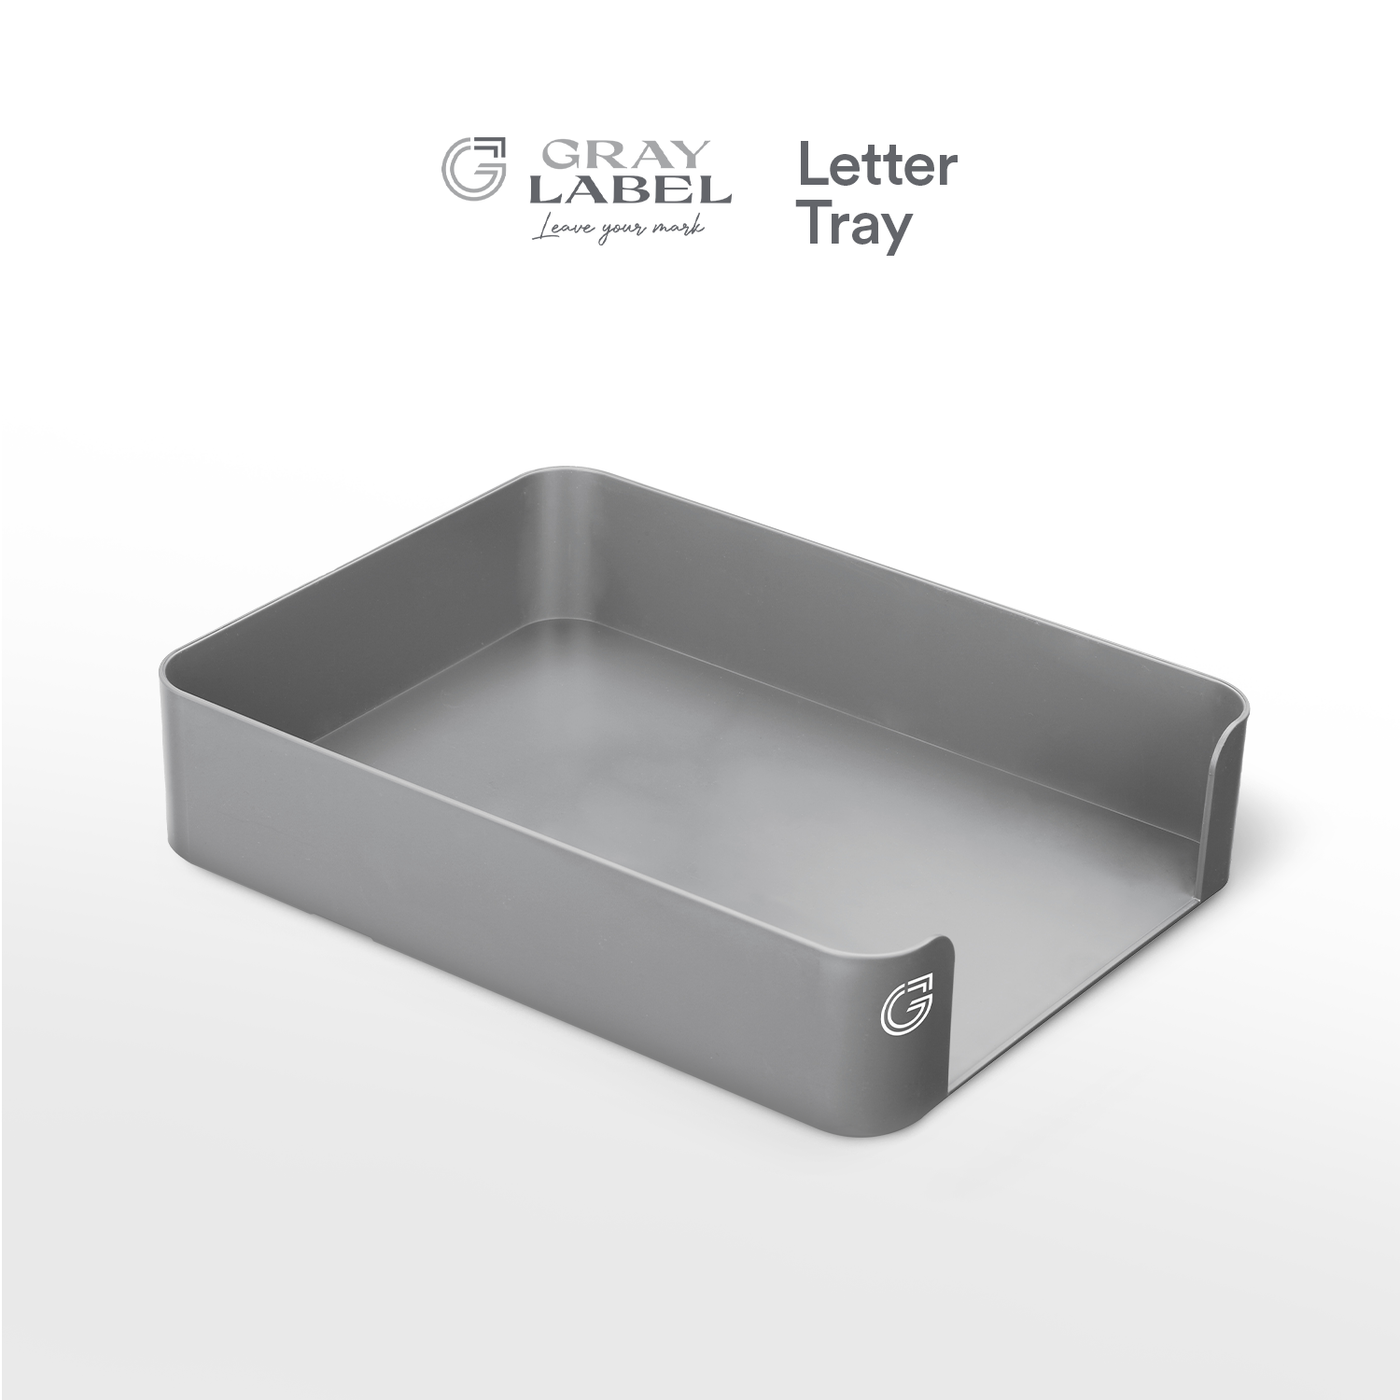 GRAY LABEL Premium Letter Tray Organizer